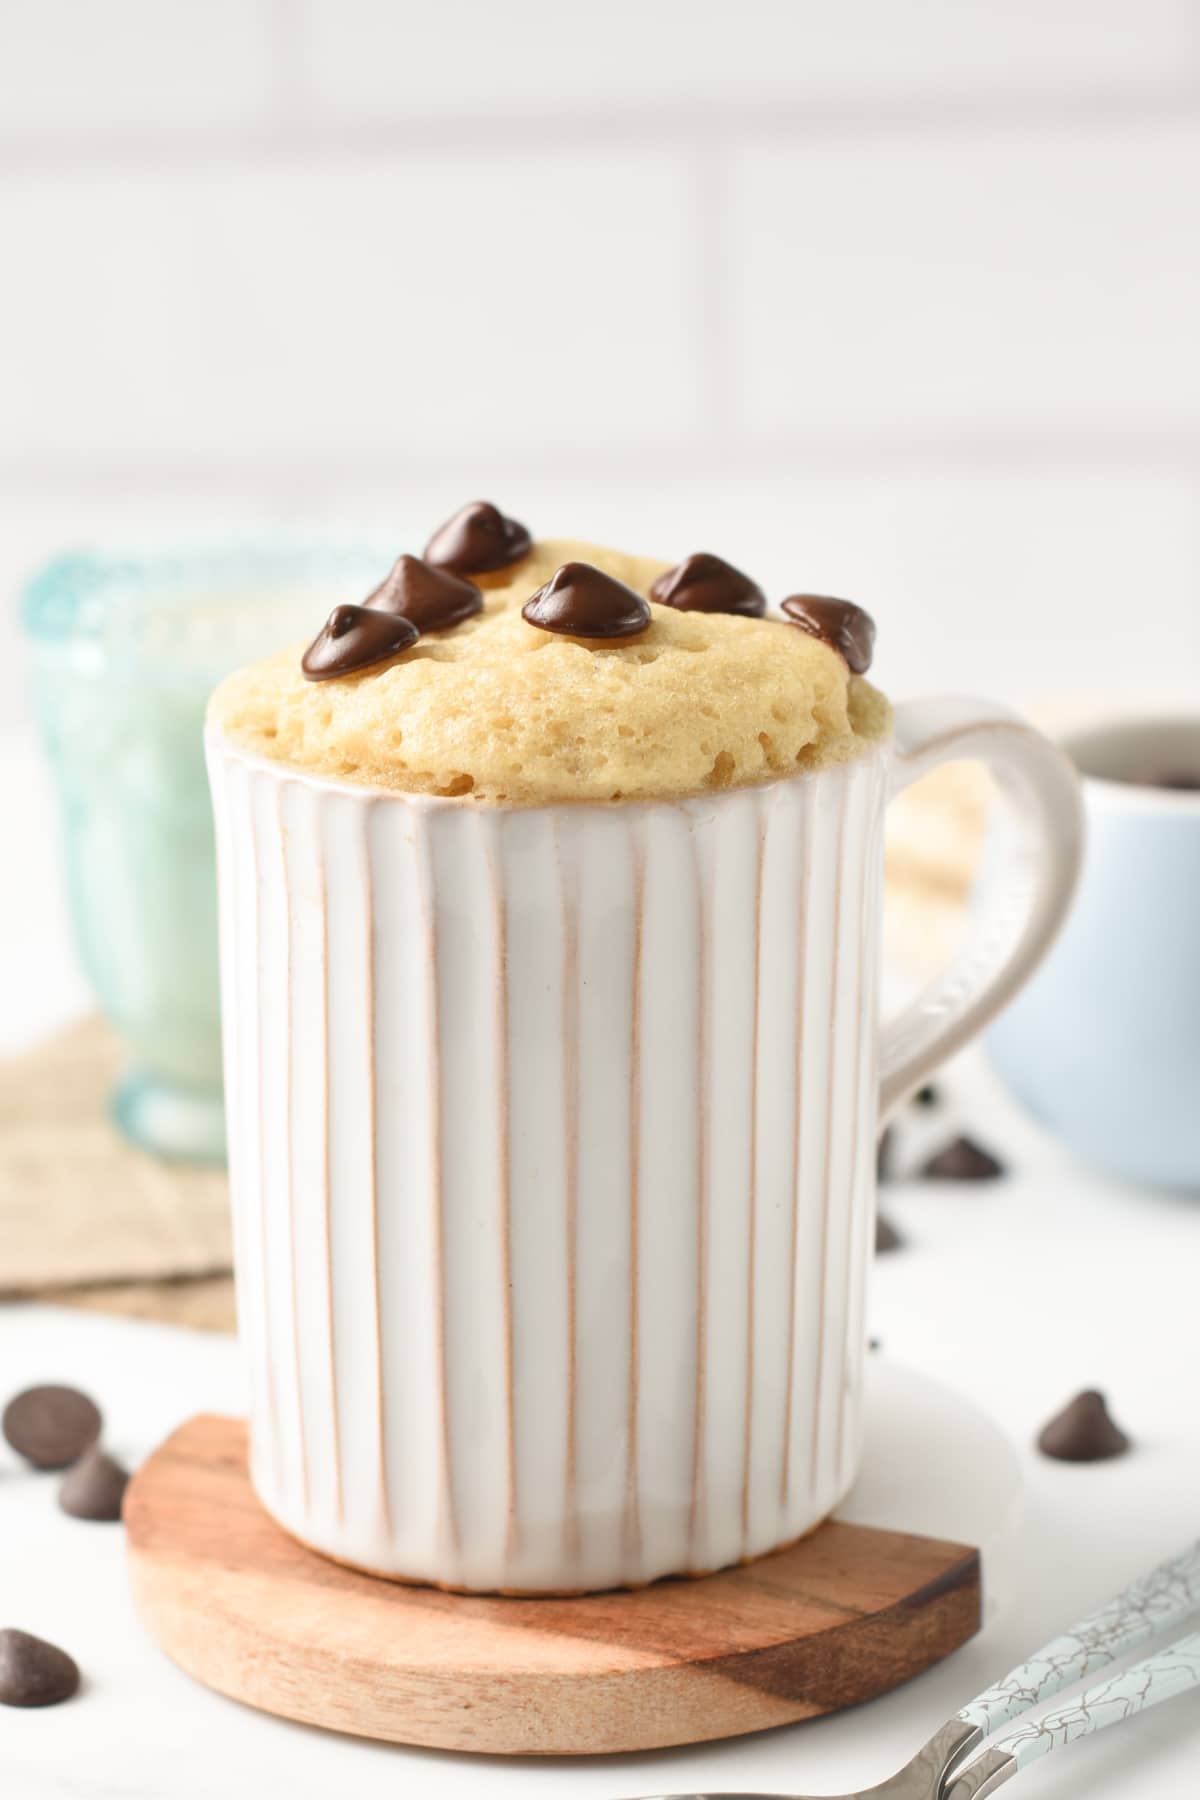 Chocolate Chip Muffin in a Mug